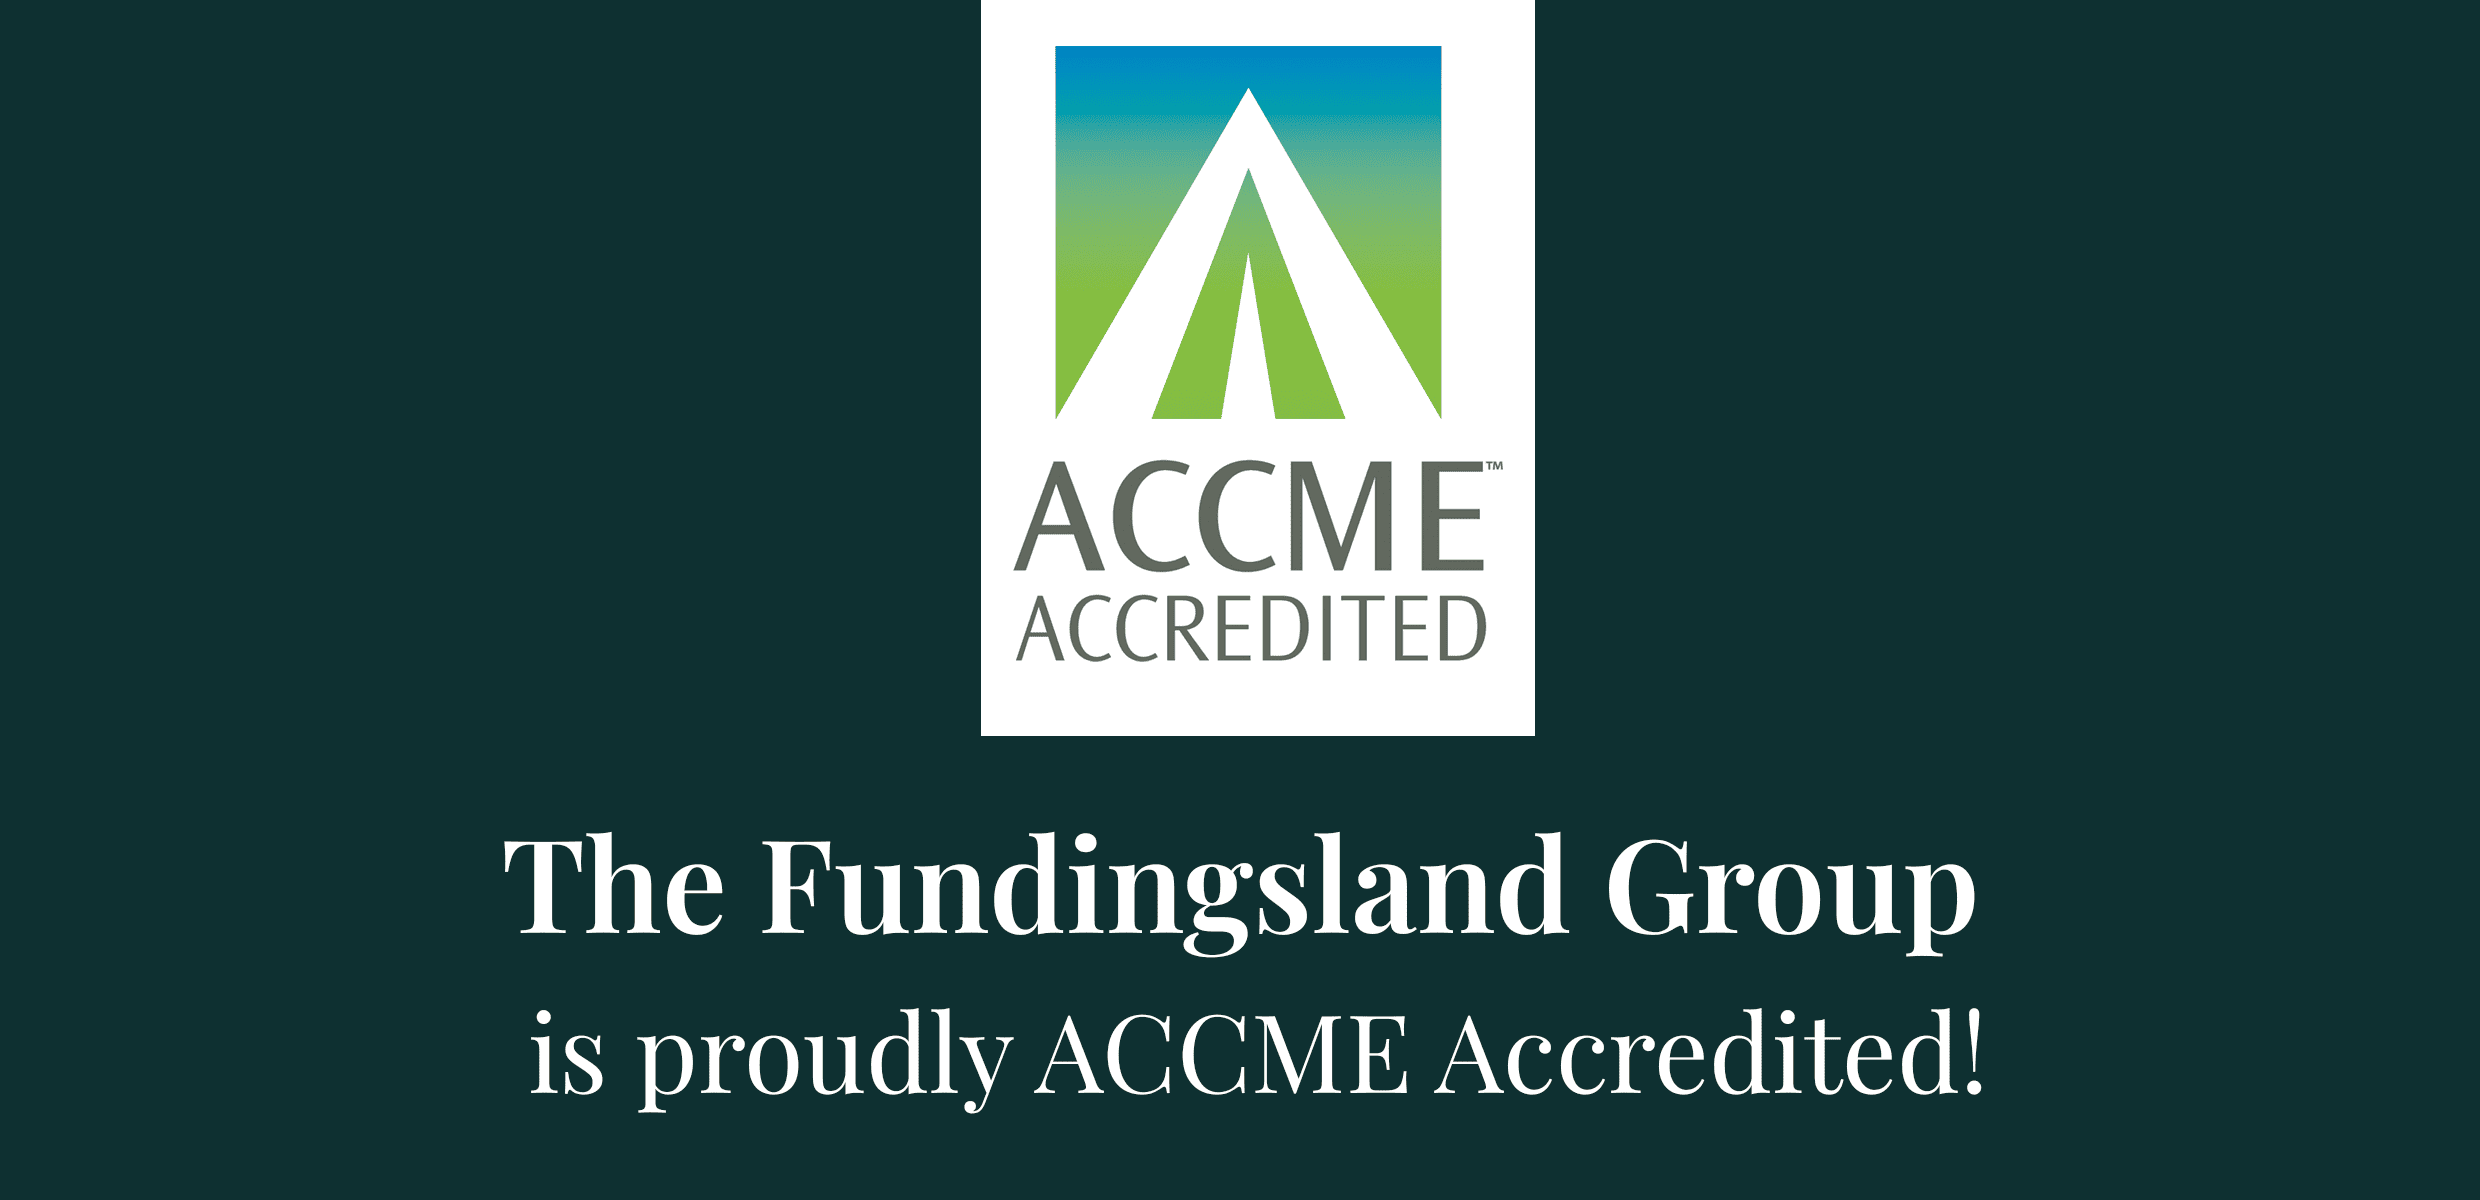 The Fundingsland Group Achieves Prestigious ACCME Accreditation